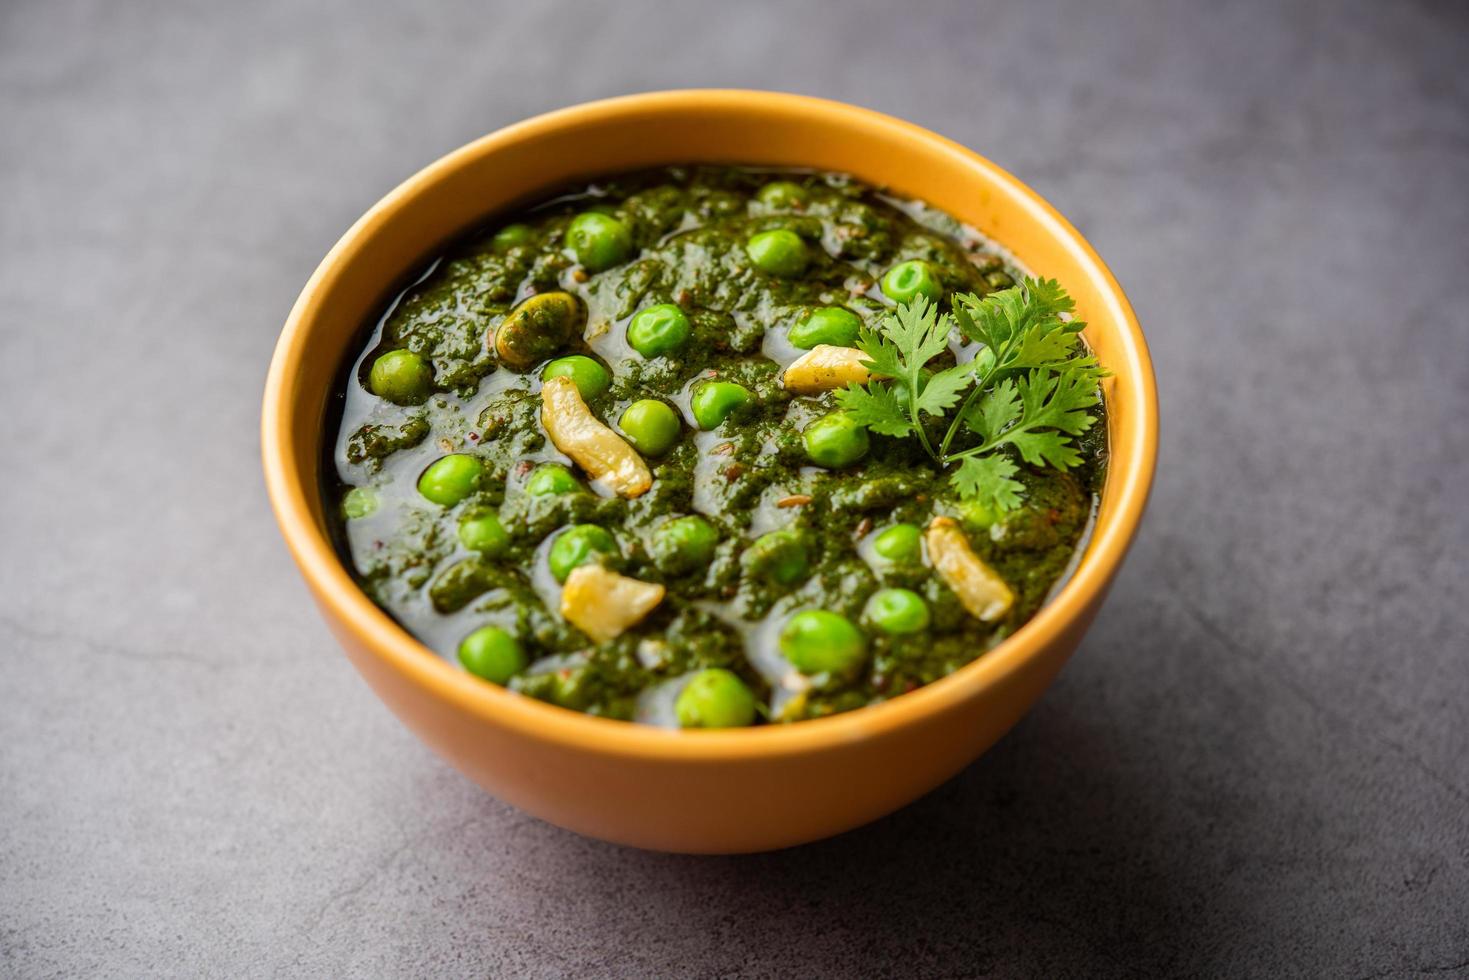 palak matar curry anche conosciuto come spinaci geen piselli masala sabzi o Sabji, indiano cibo foto